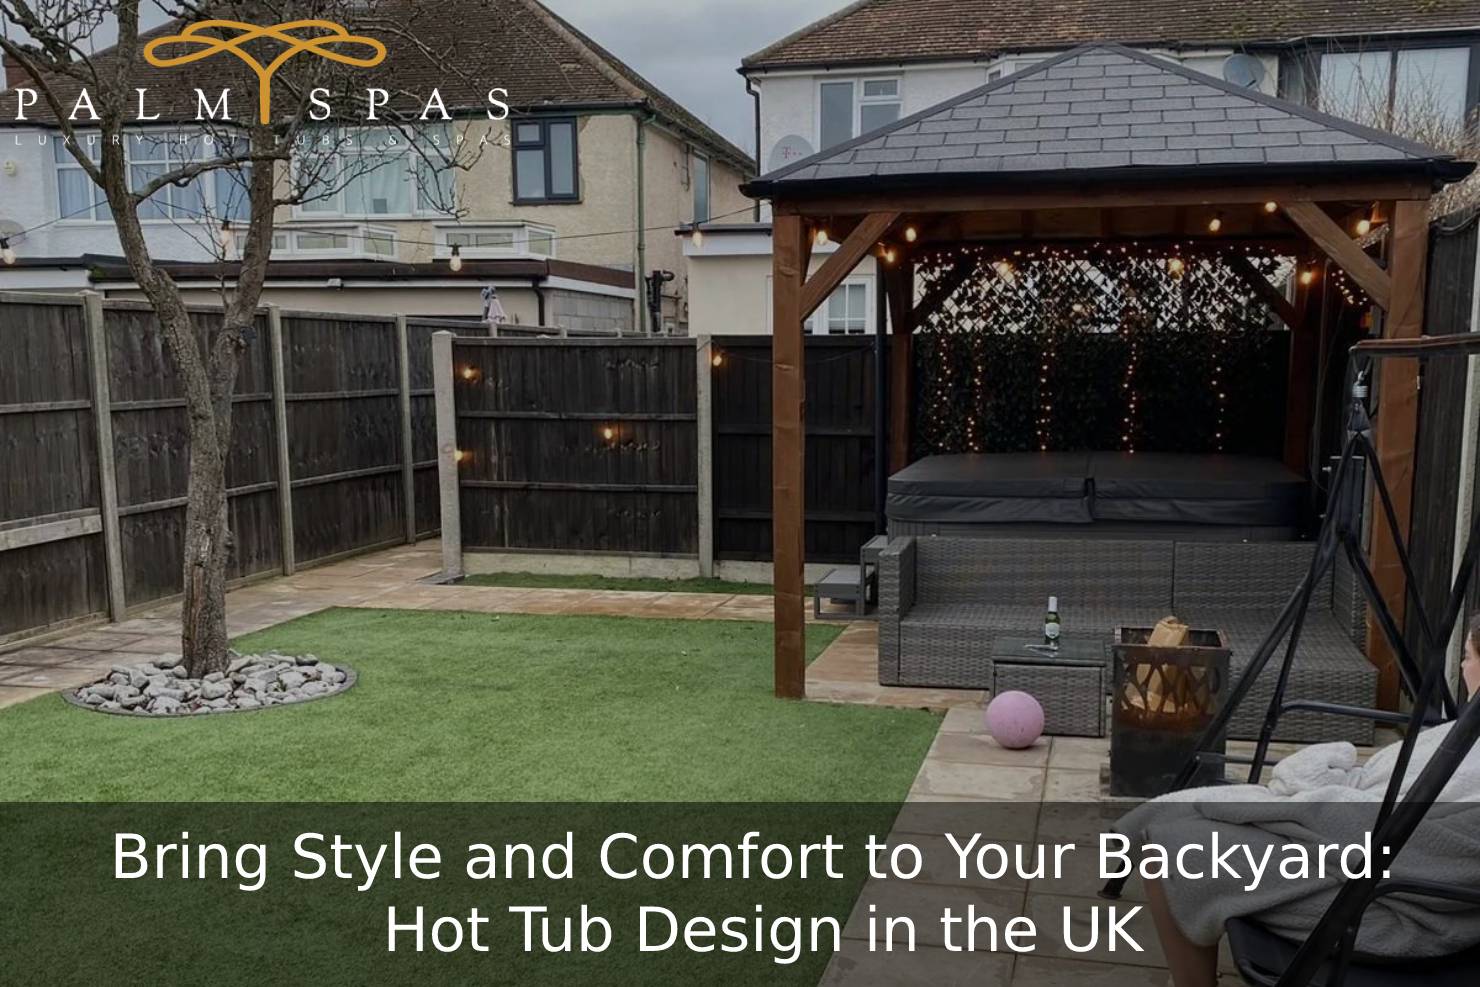 Hot Tub Design in the UK